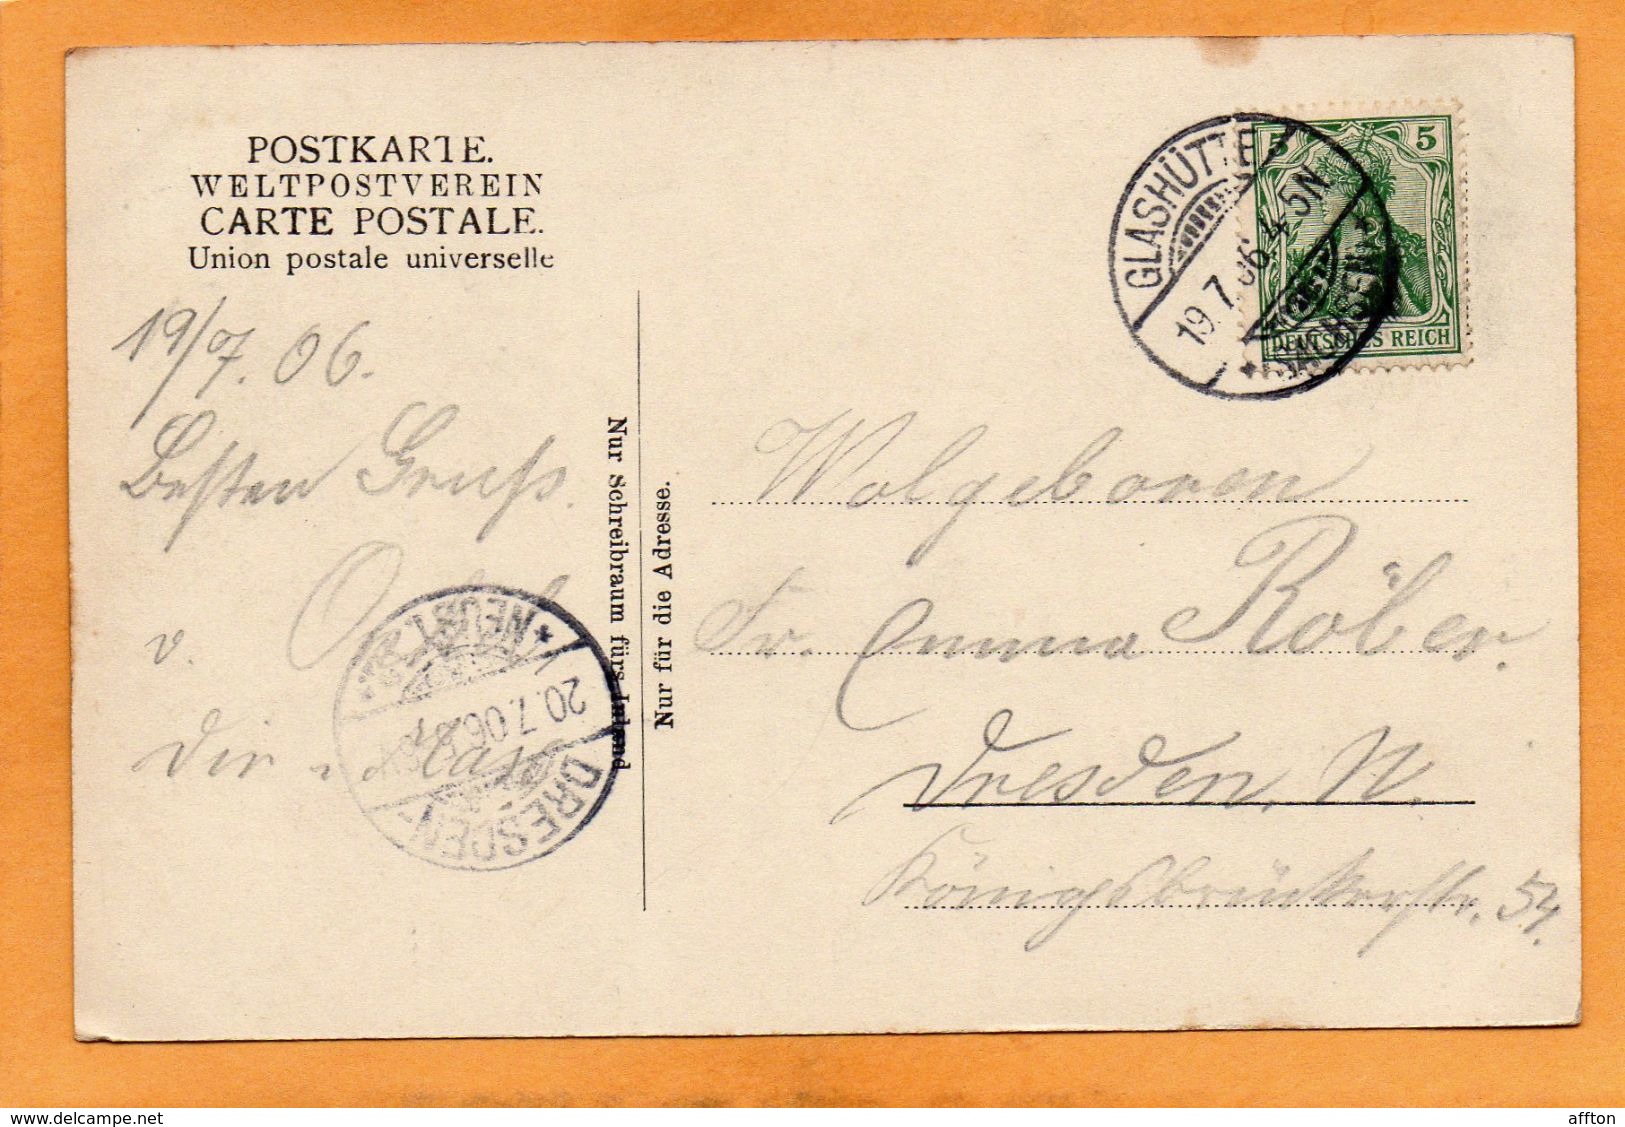 Glashutte I Sa Germany 1906 Postcard - Glashütte